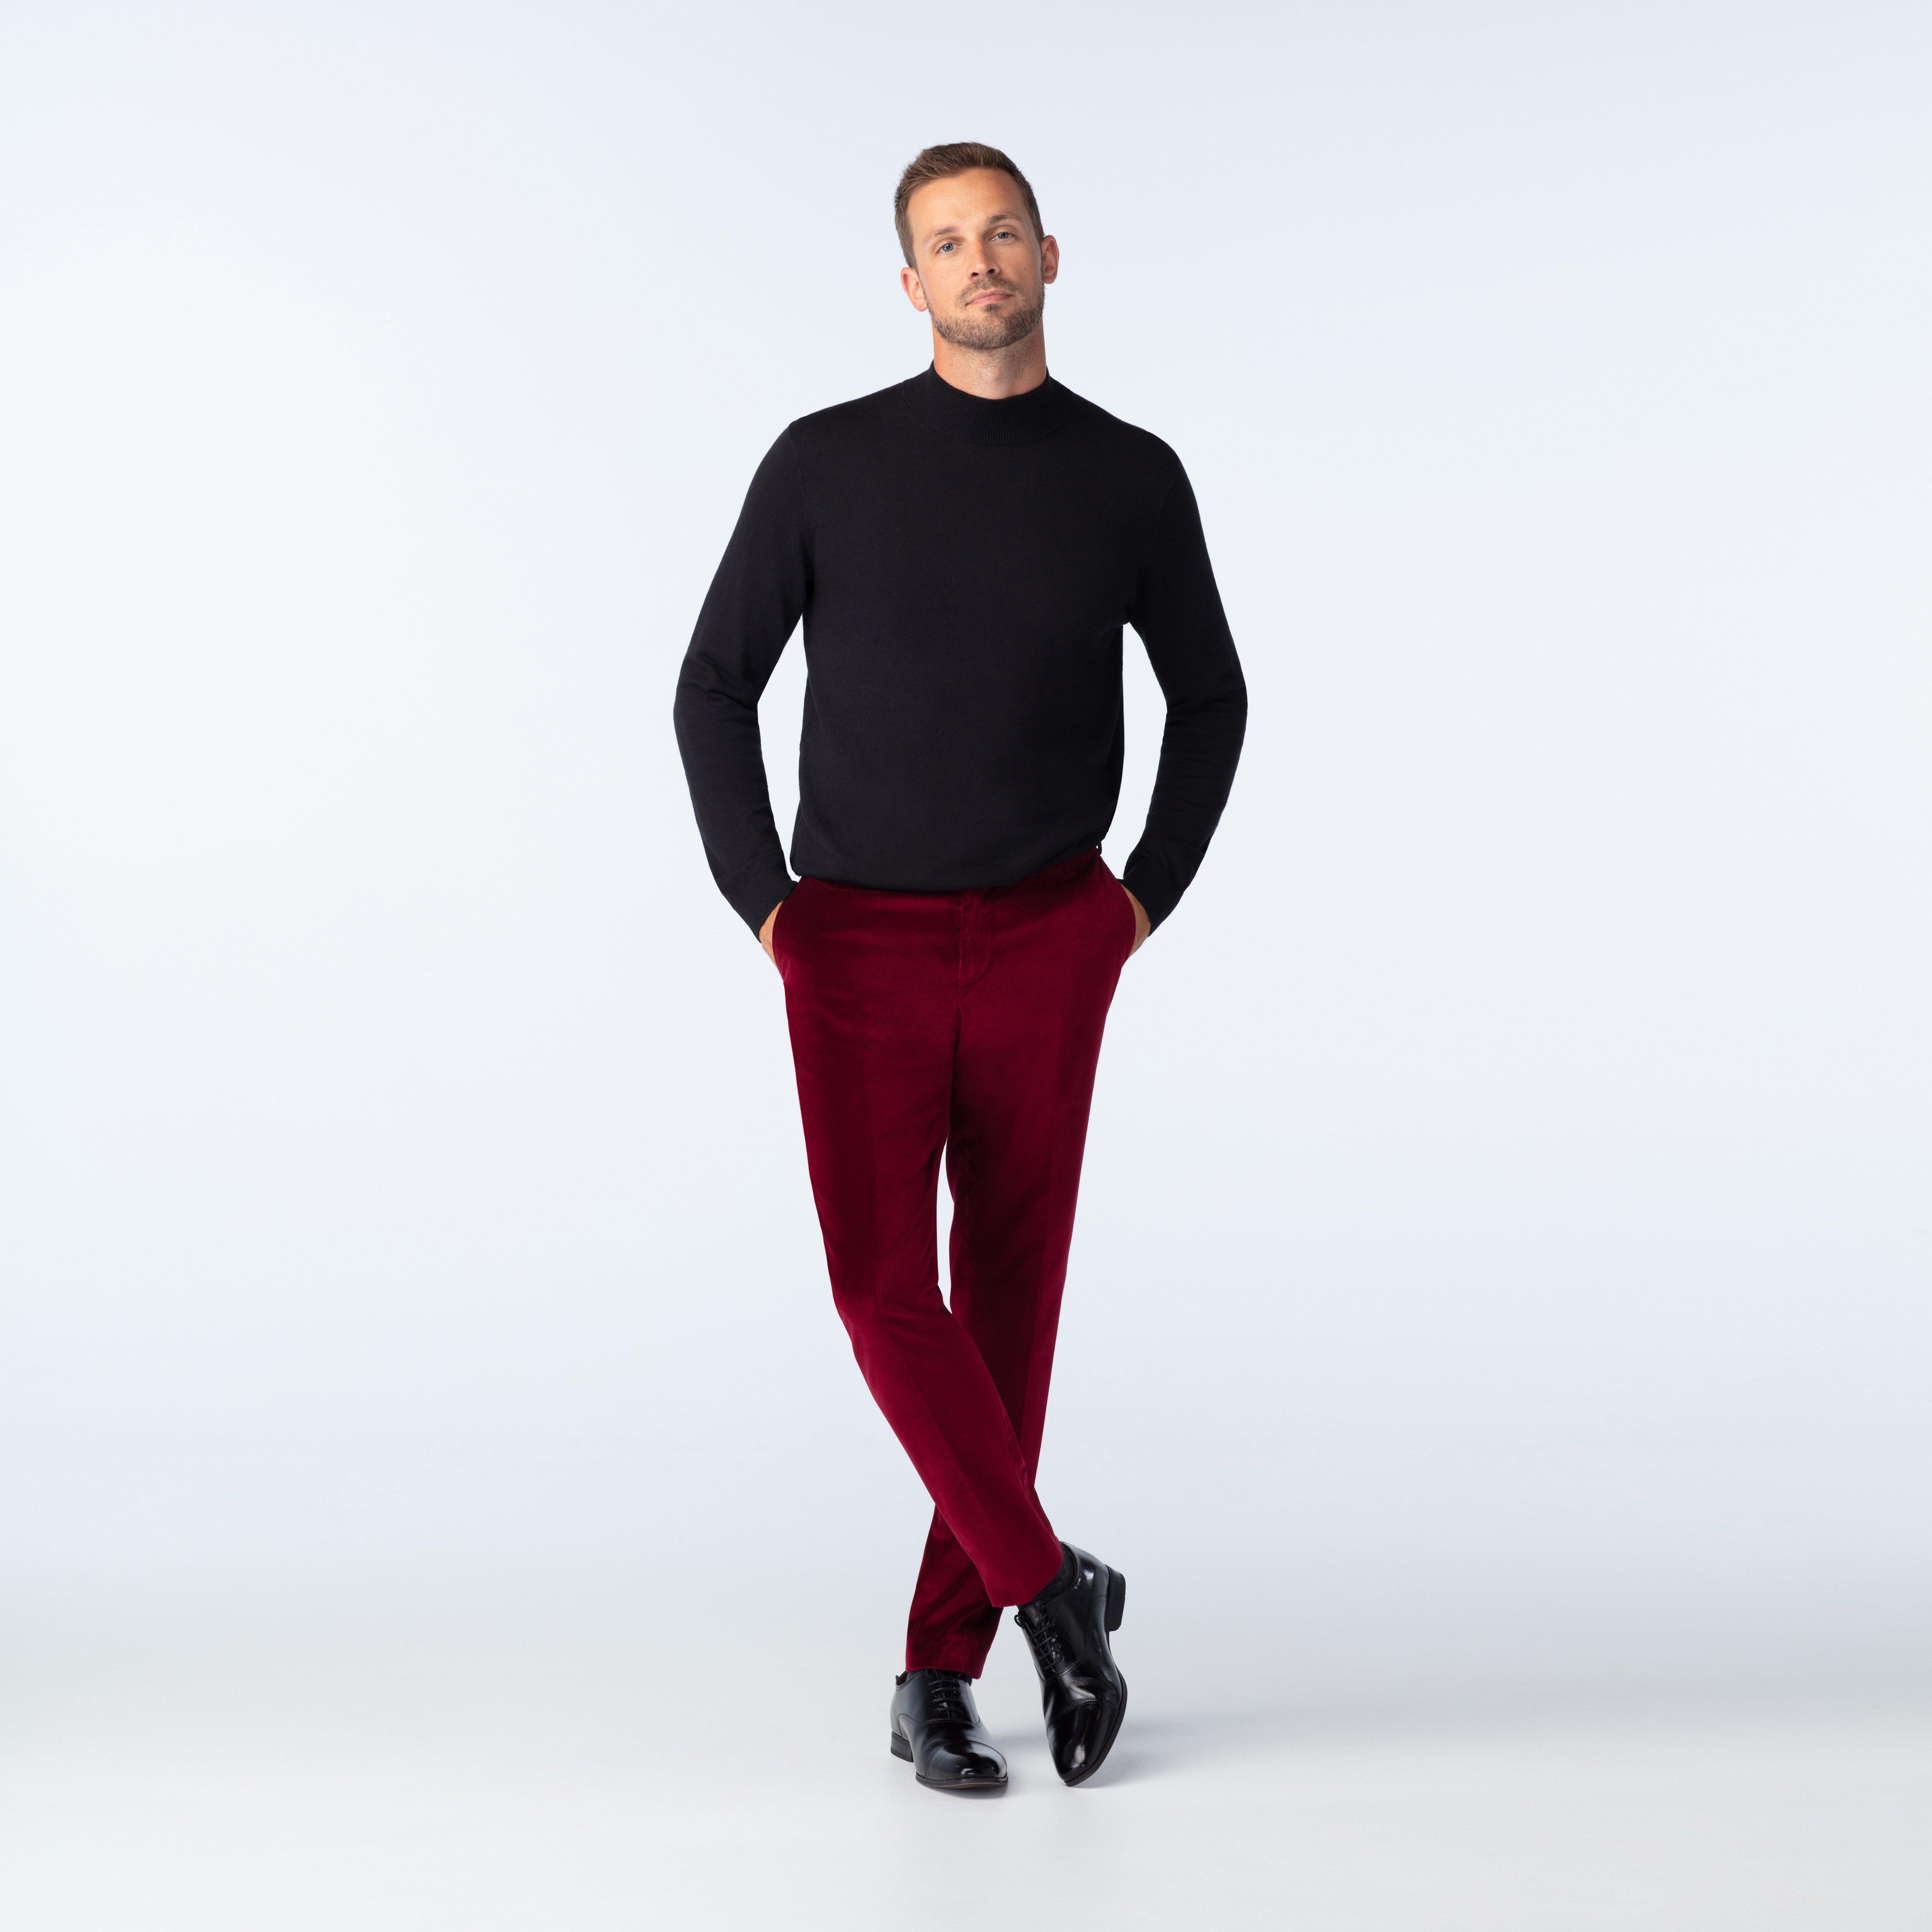 velvet pants | Mens outfits, Stylish men, Mens fashion